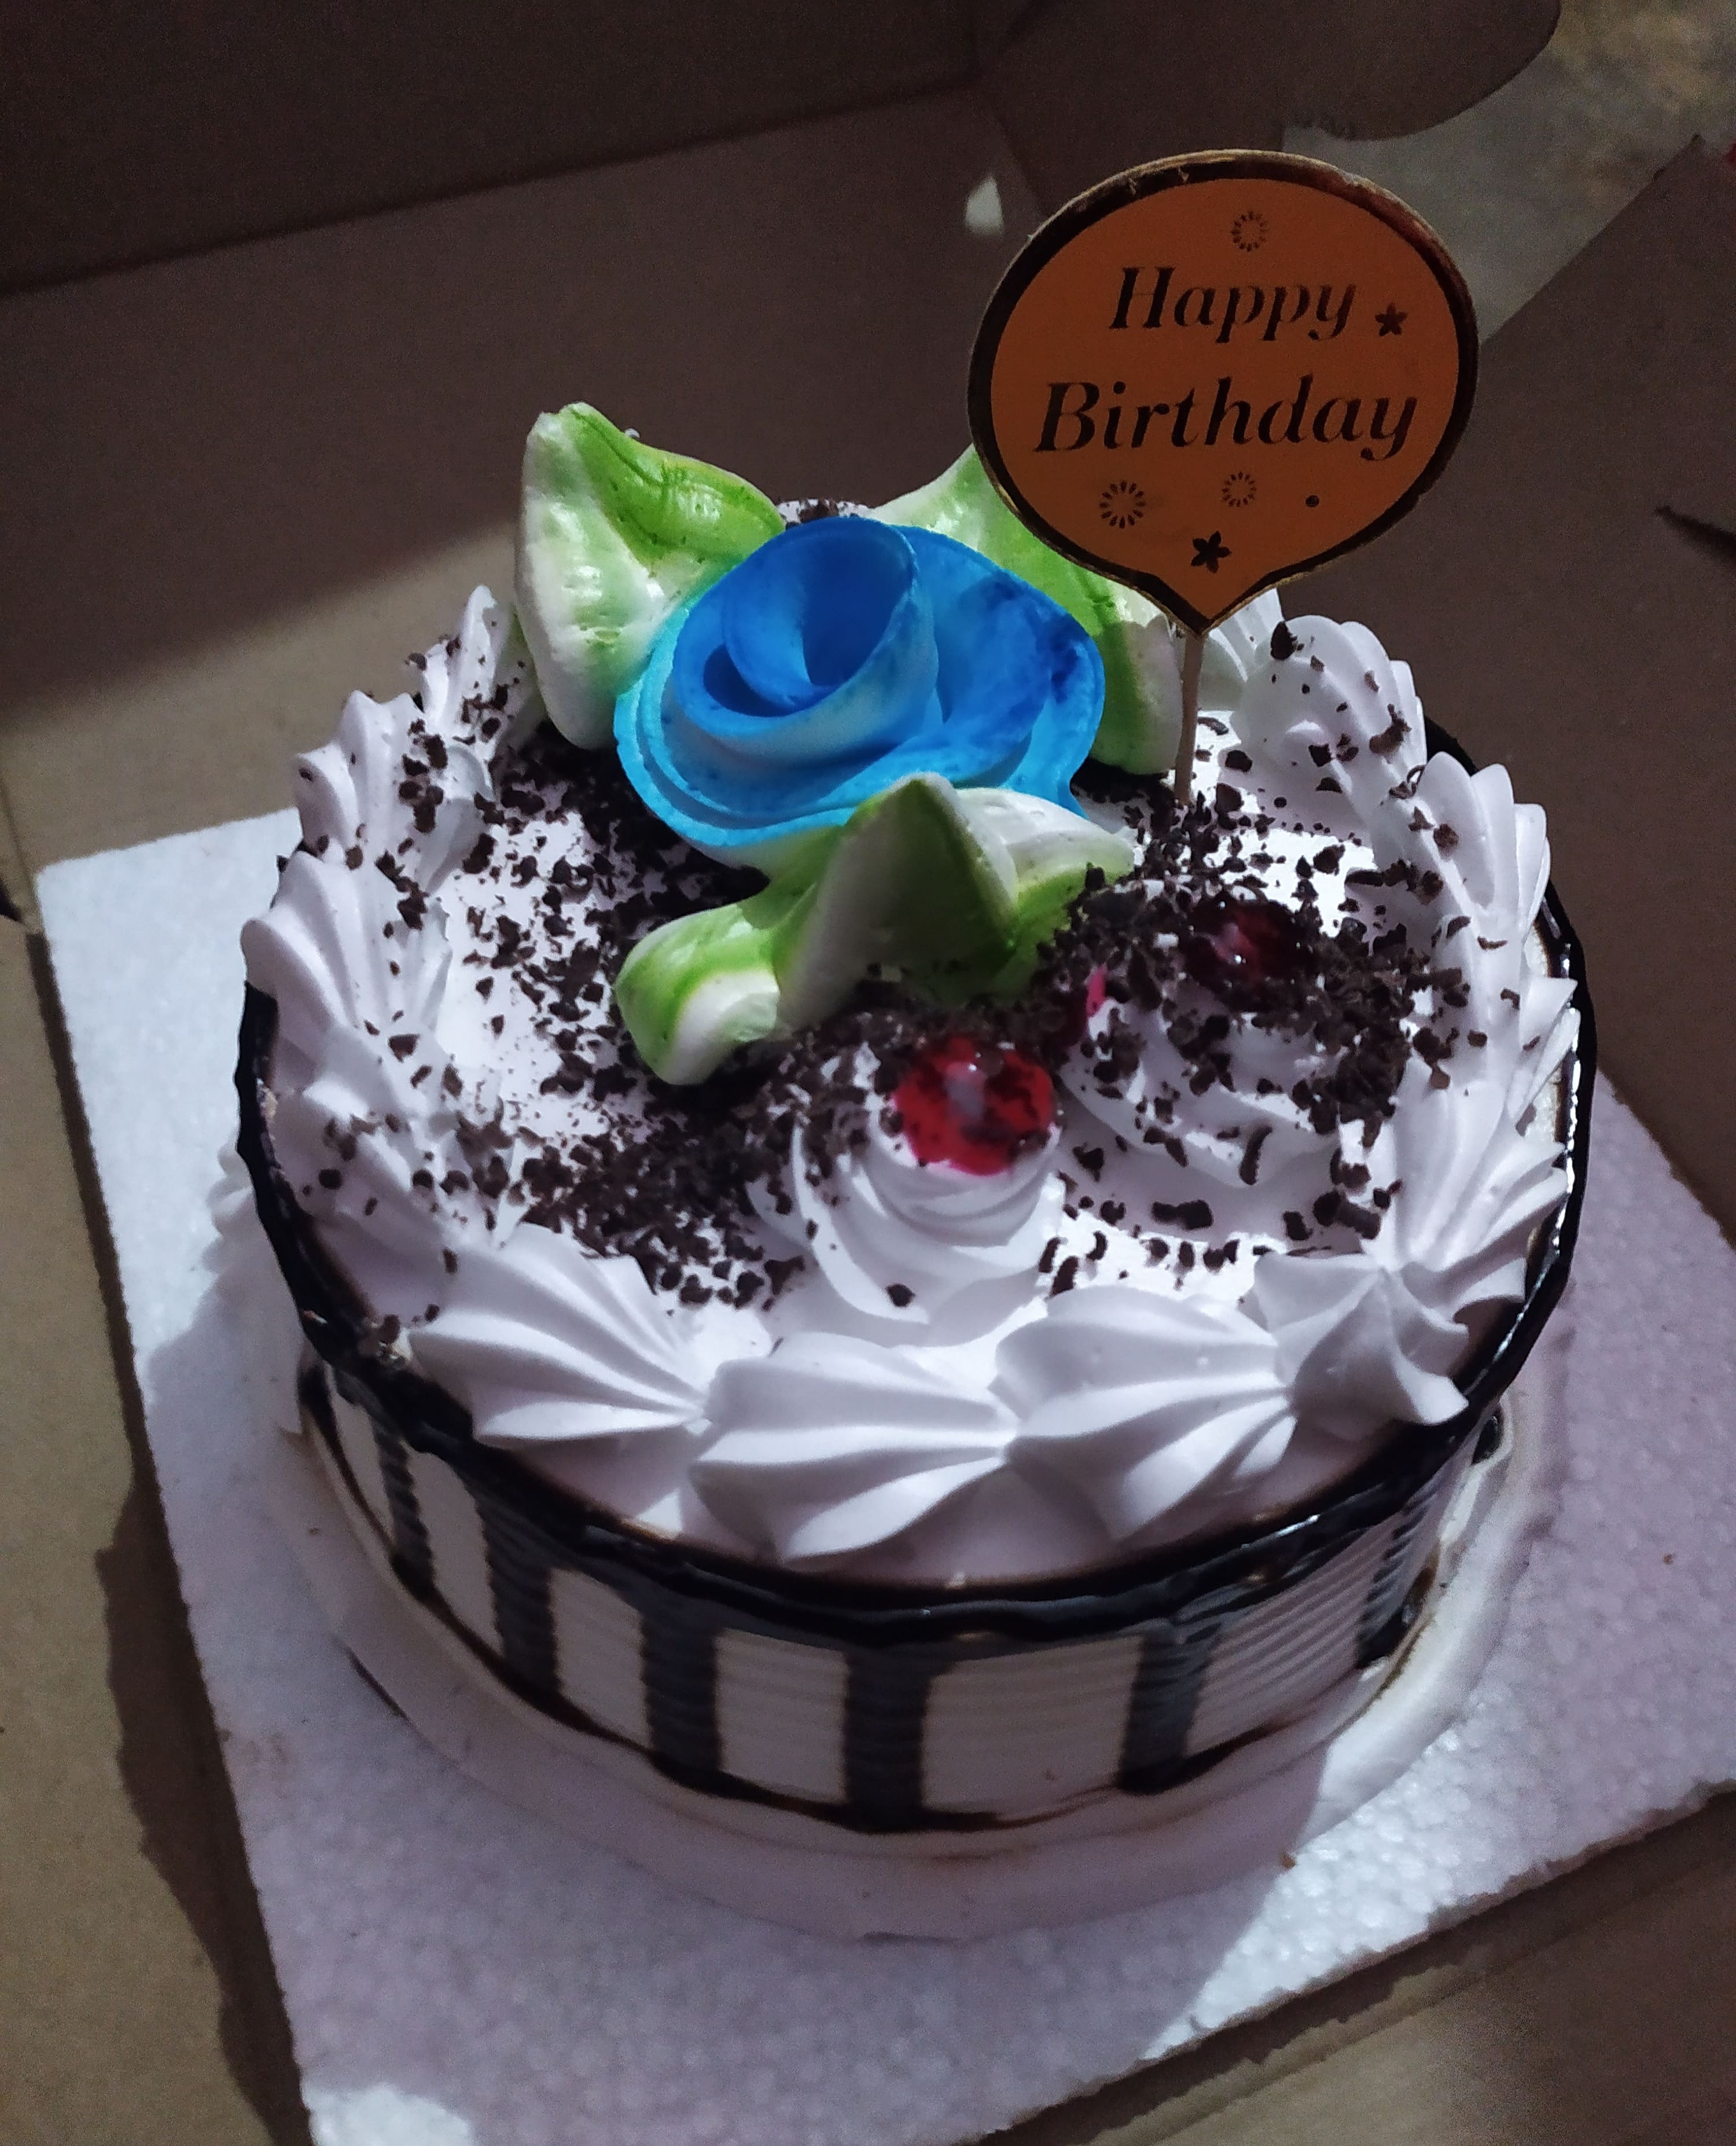 Happy Birthday Cake GIFs | Tenor